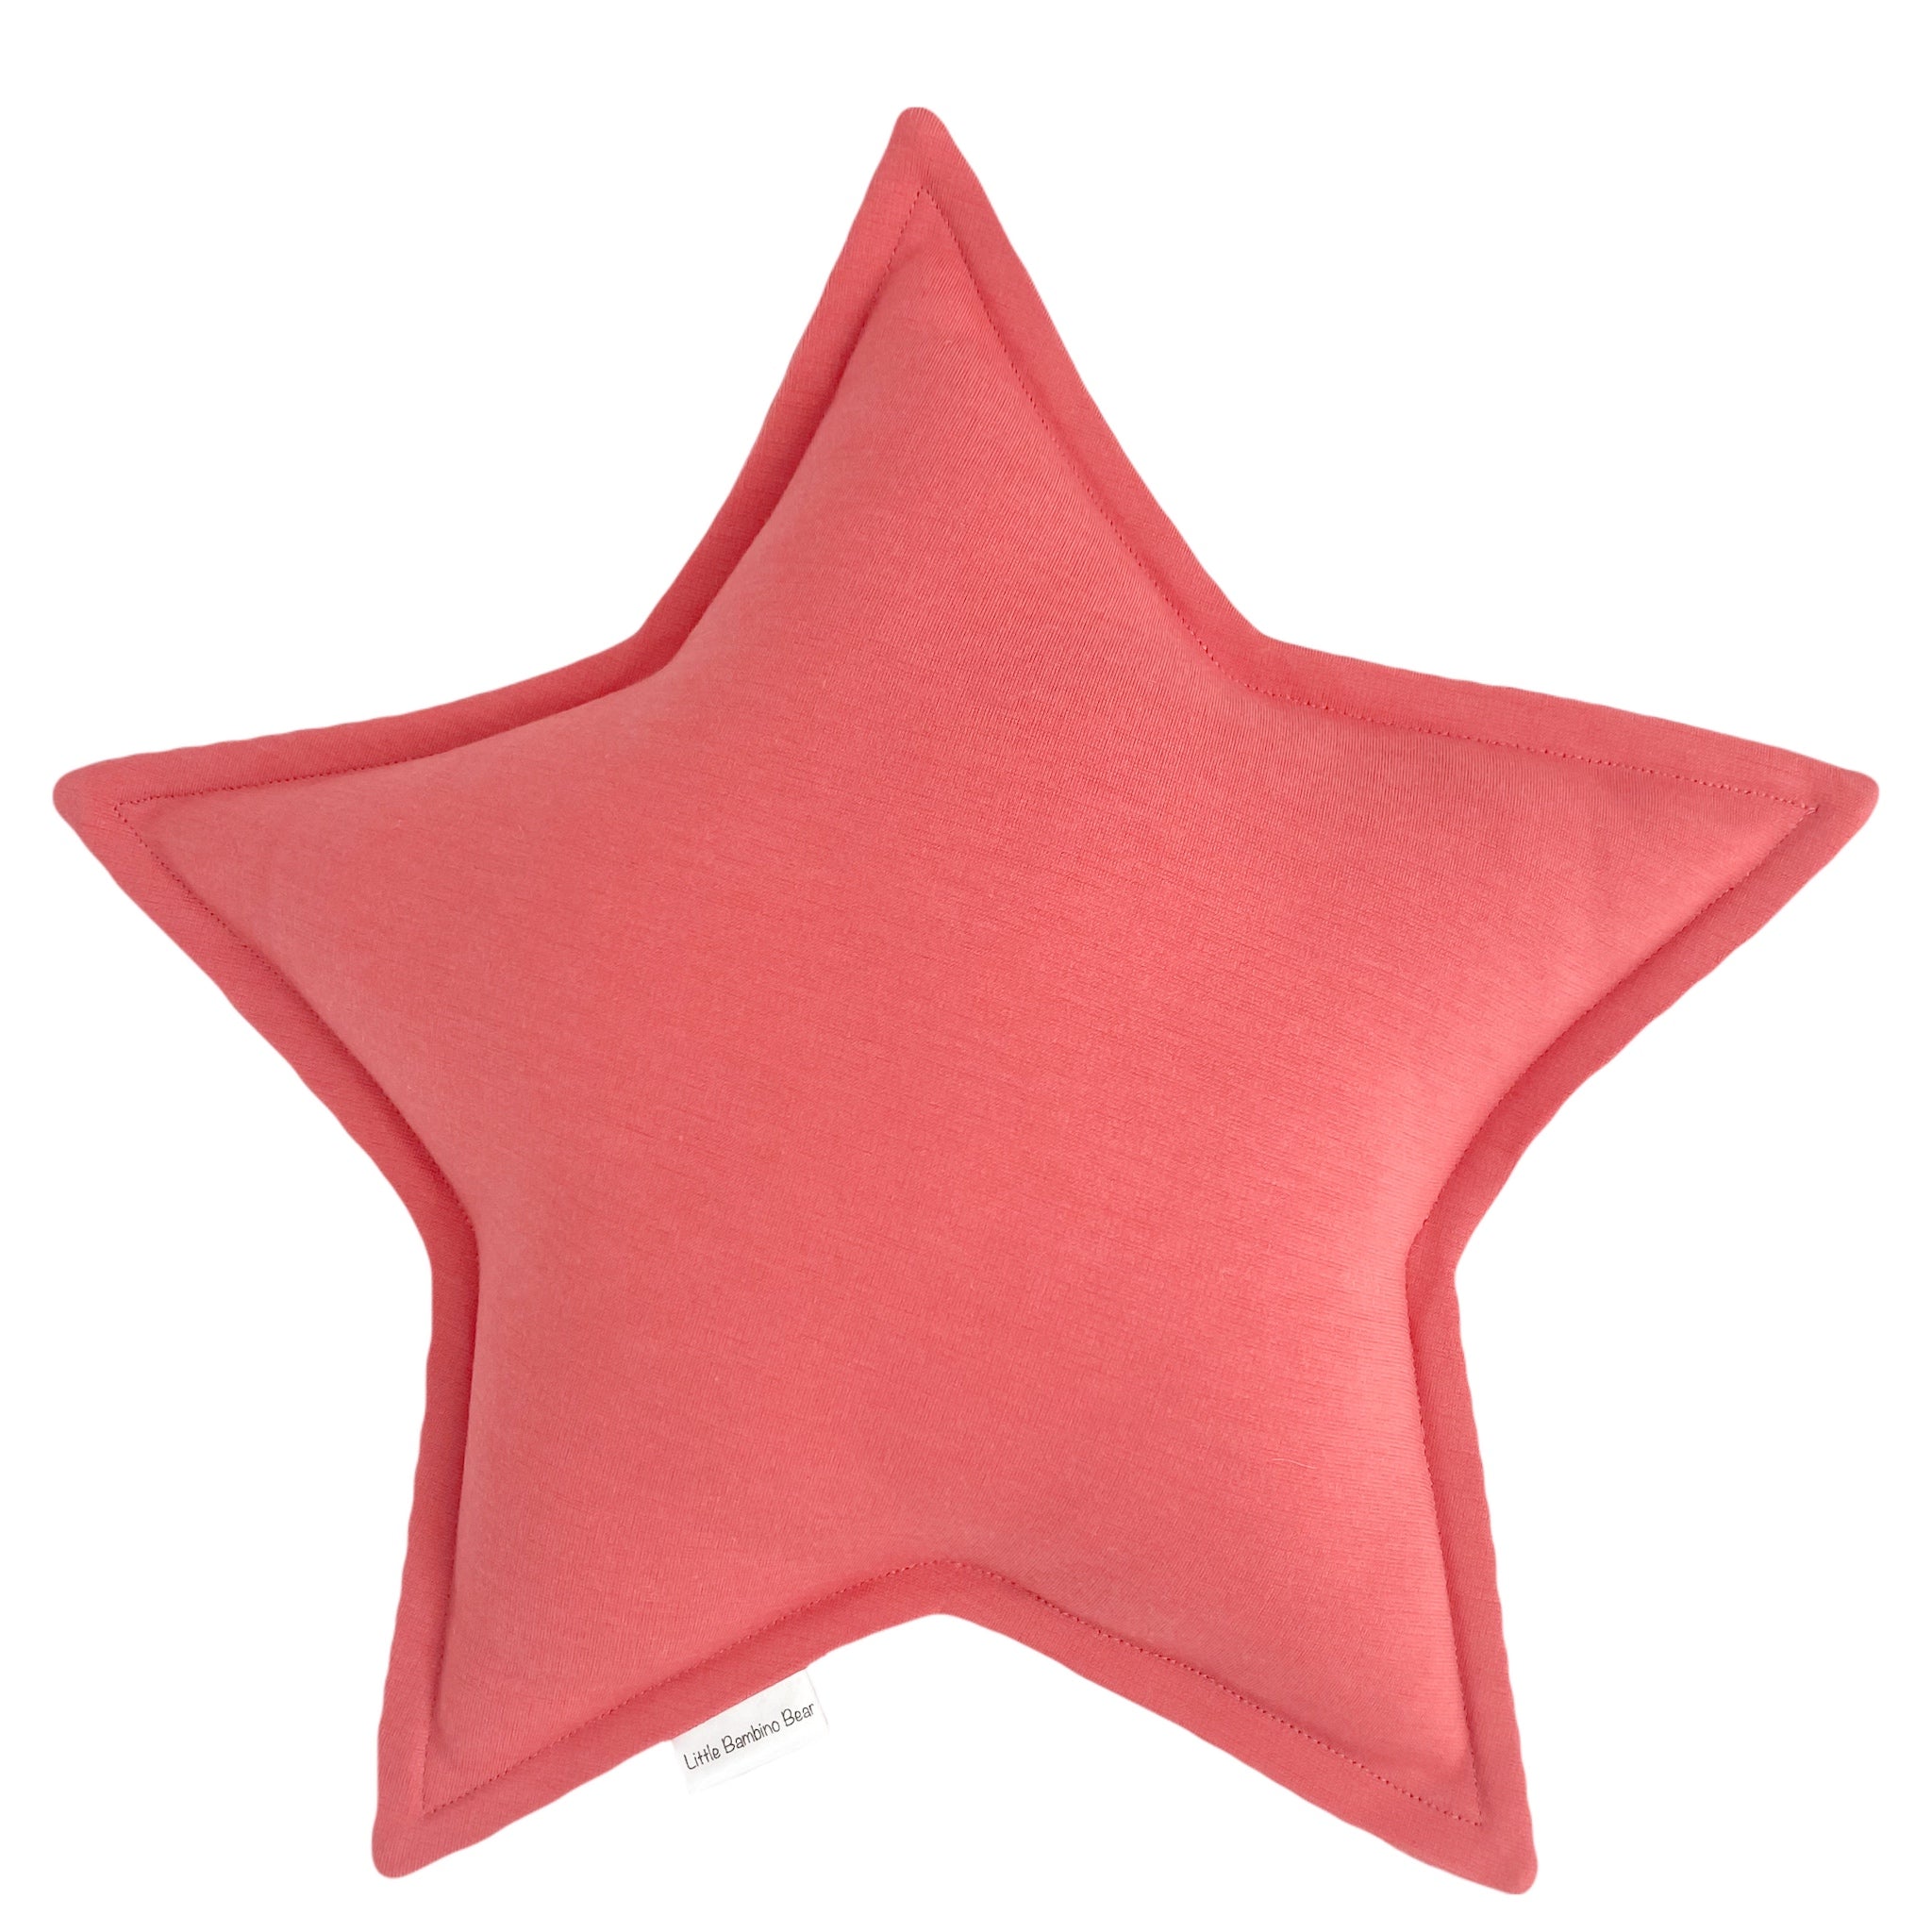 Coral Deluxe star cushion - little bambino bear